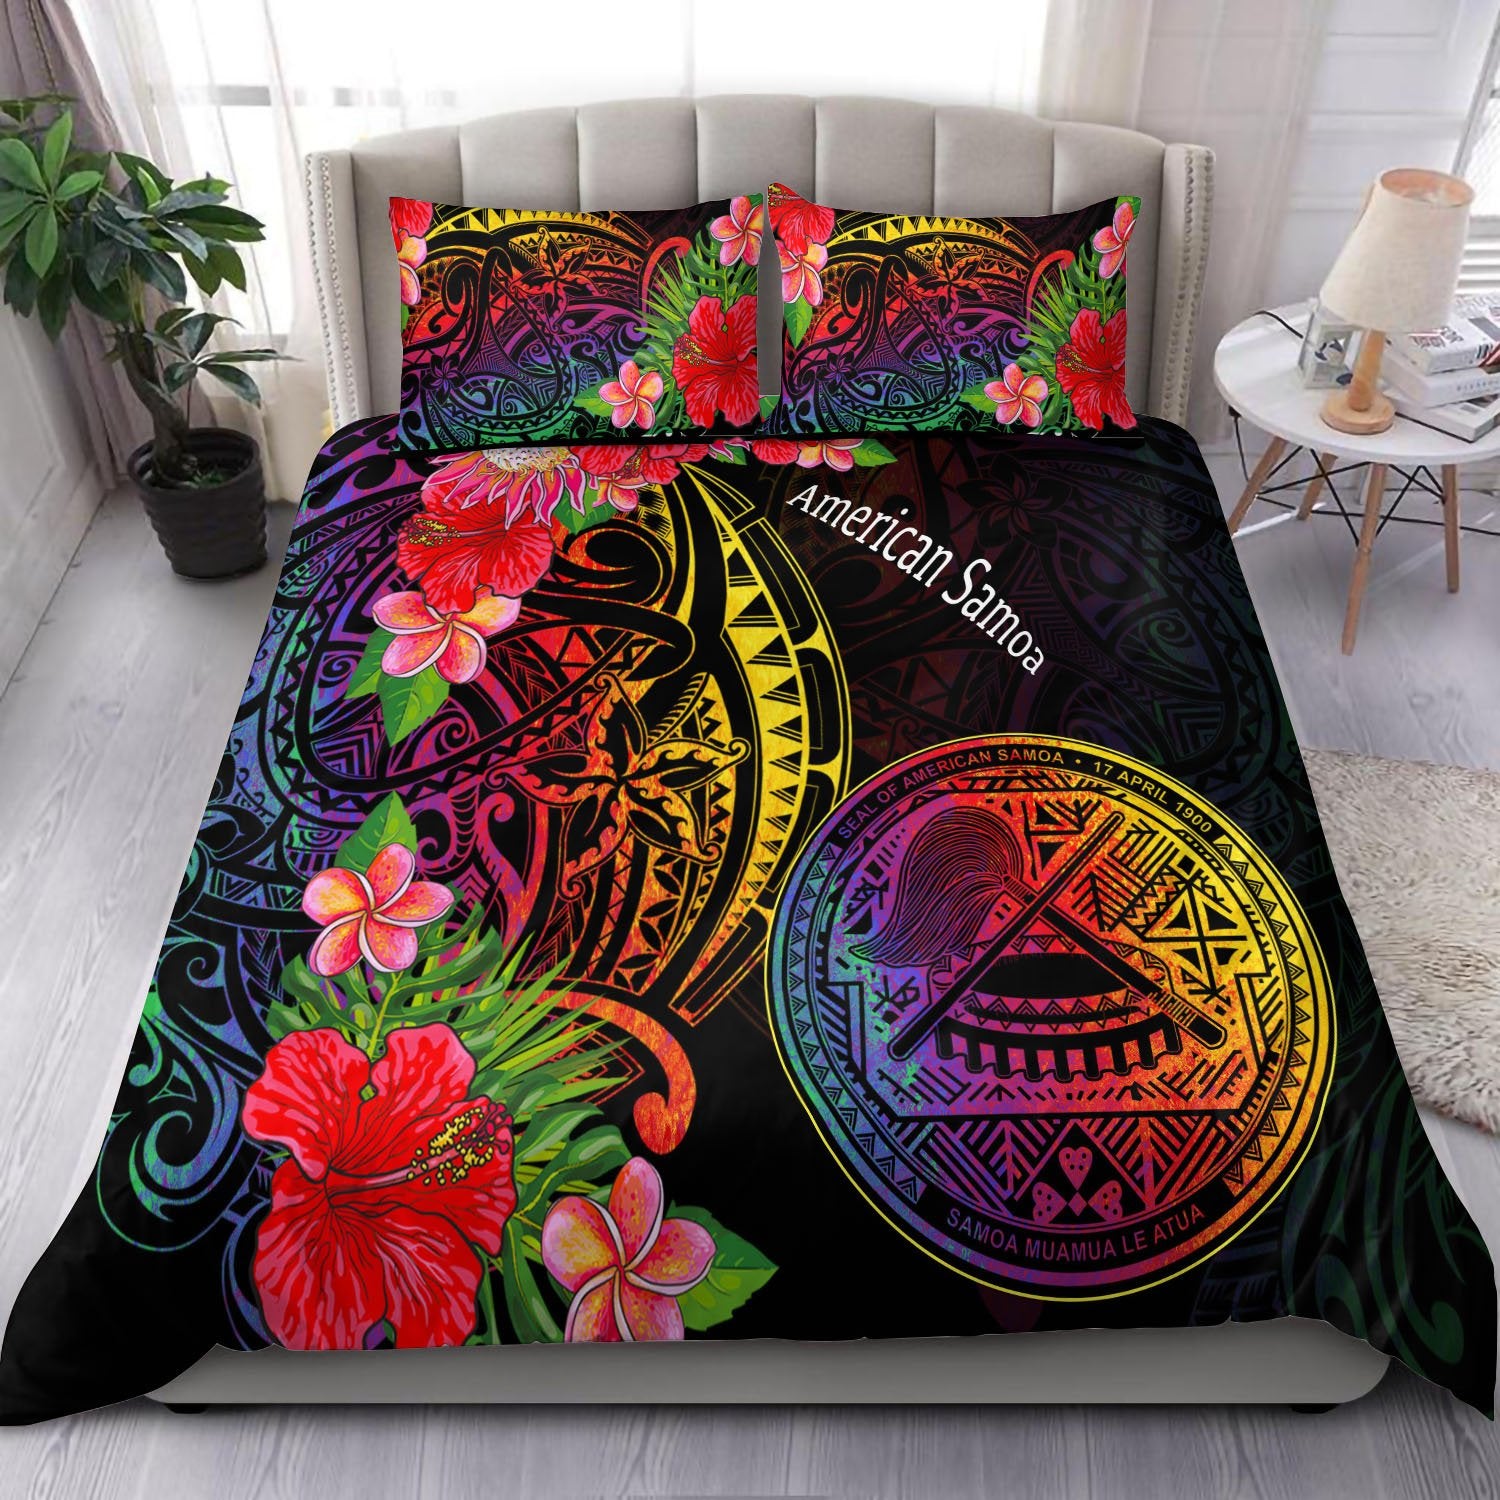 American Samoa Bedding Set - Tropical Hippie Style Black - Polynesian Pride